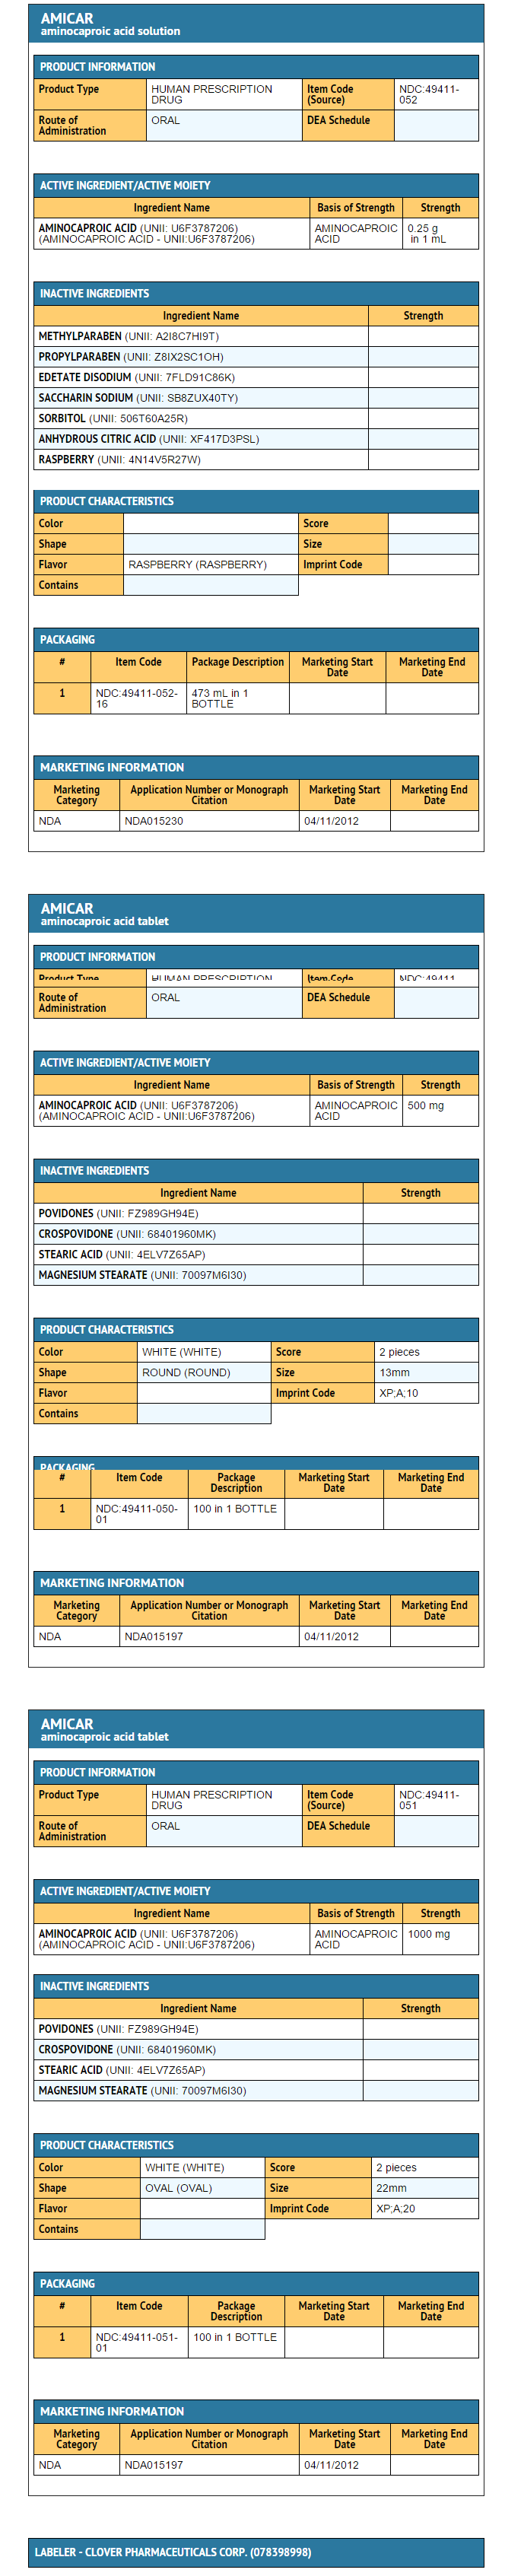 File:DailyMed AMICAR aminocaproic acid solution AMICAR aminocaproic acid tablet.png